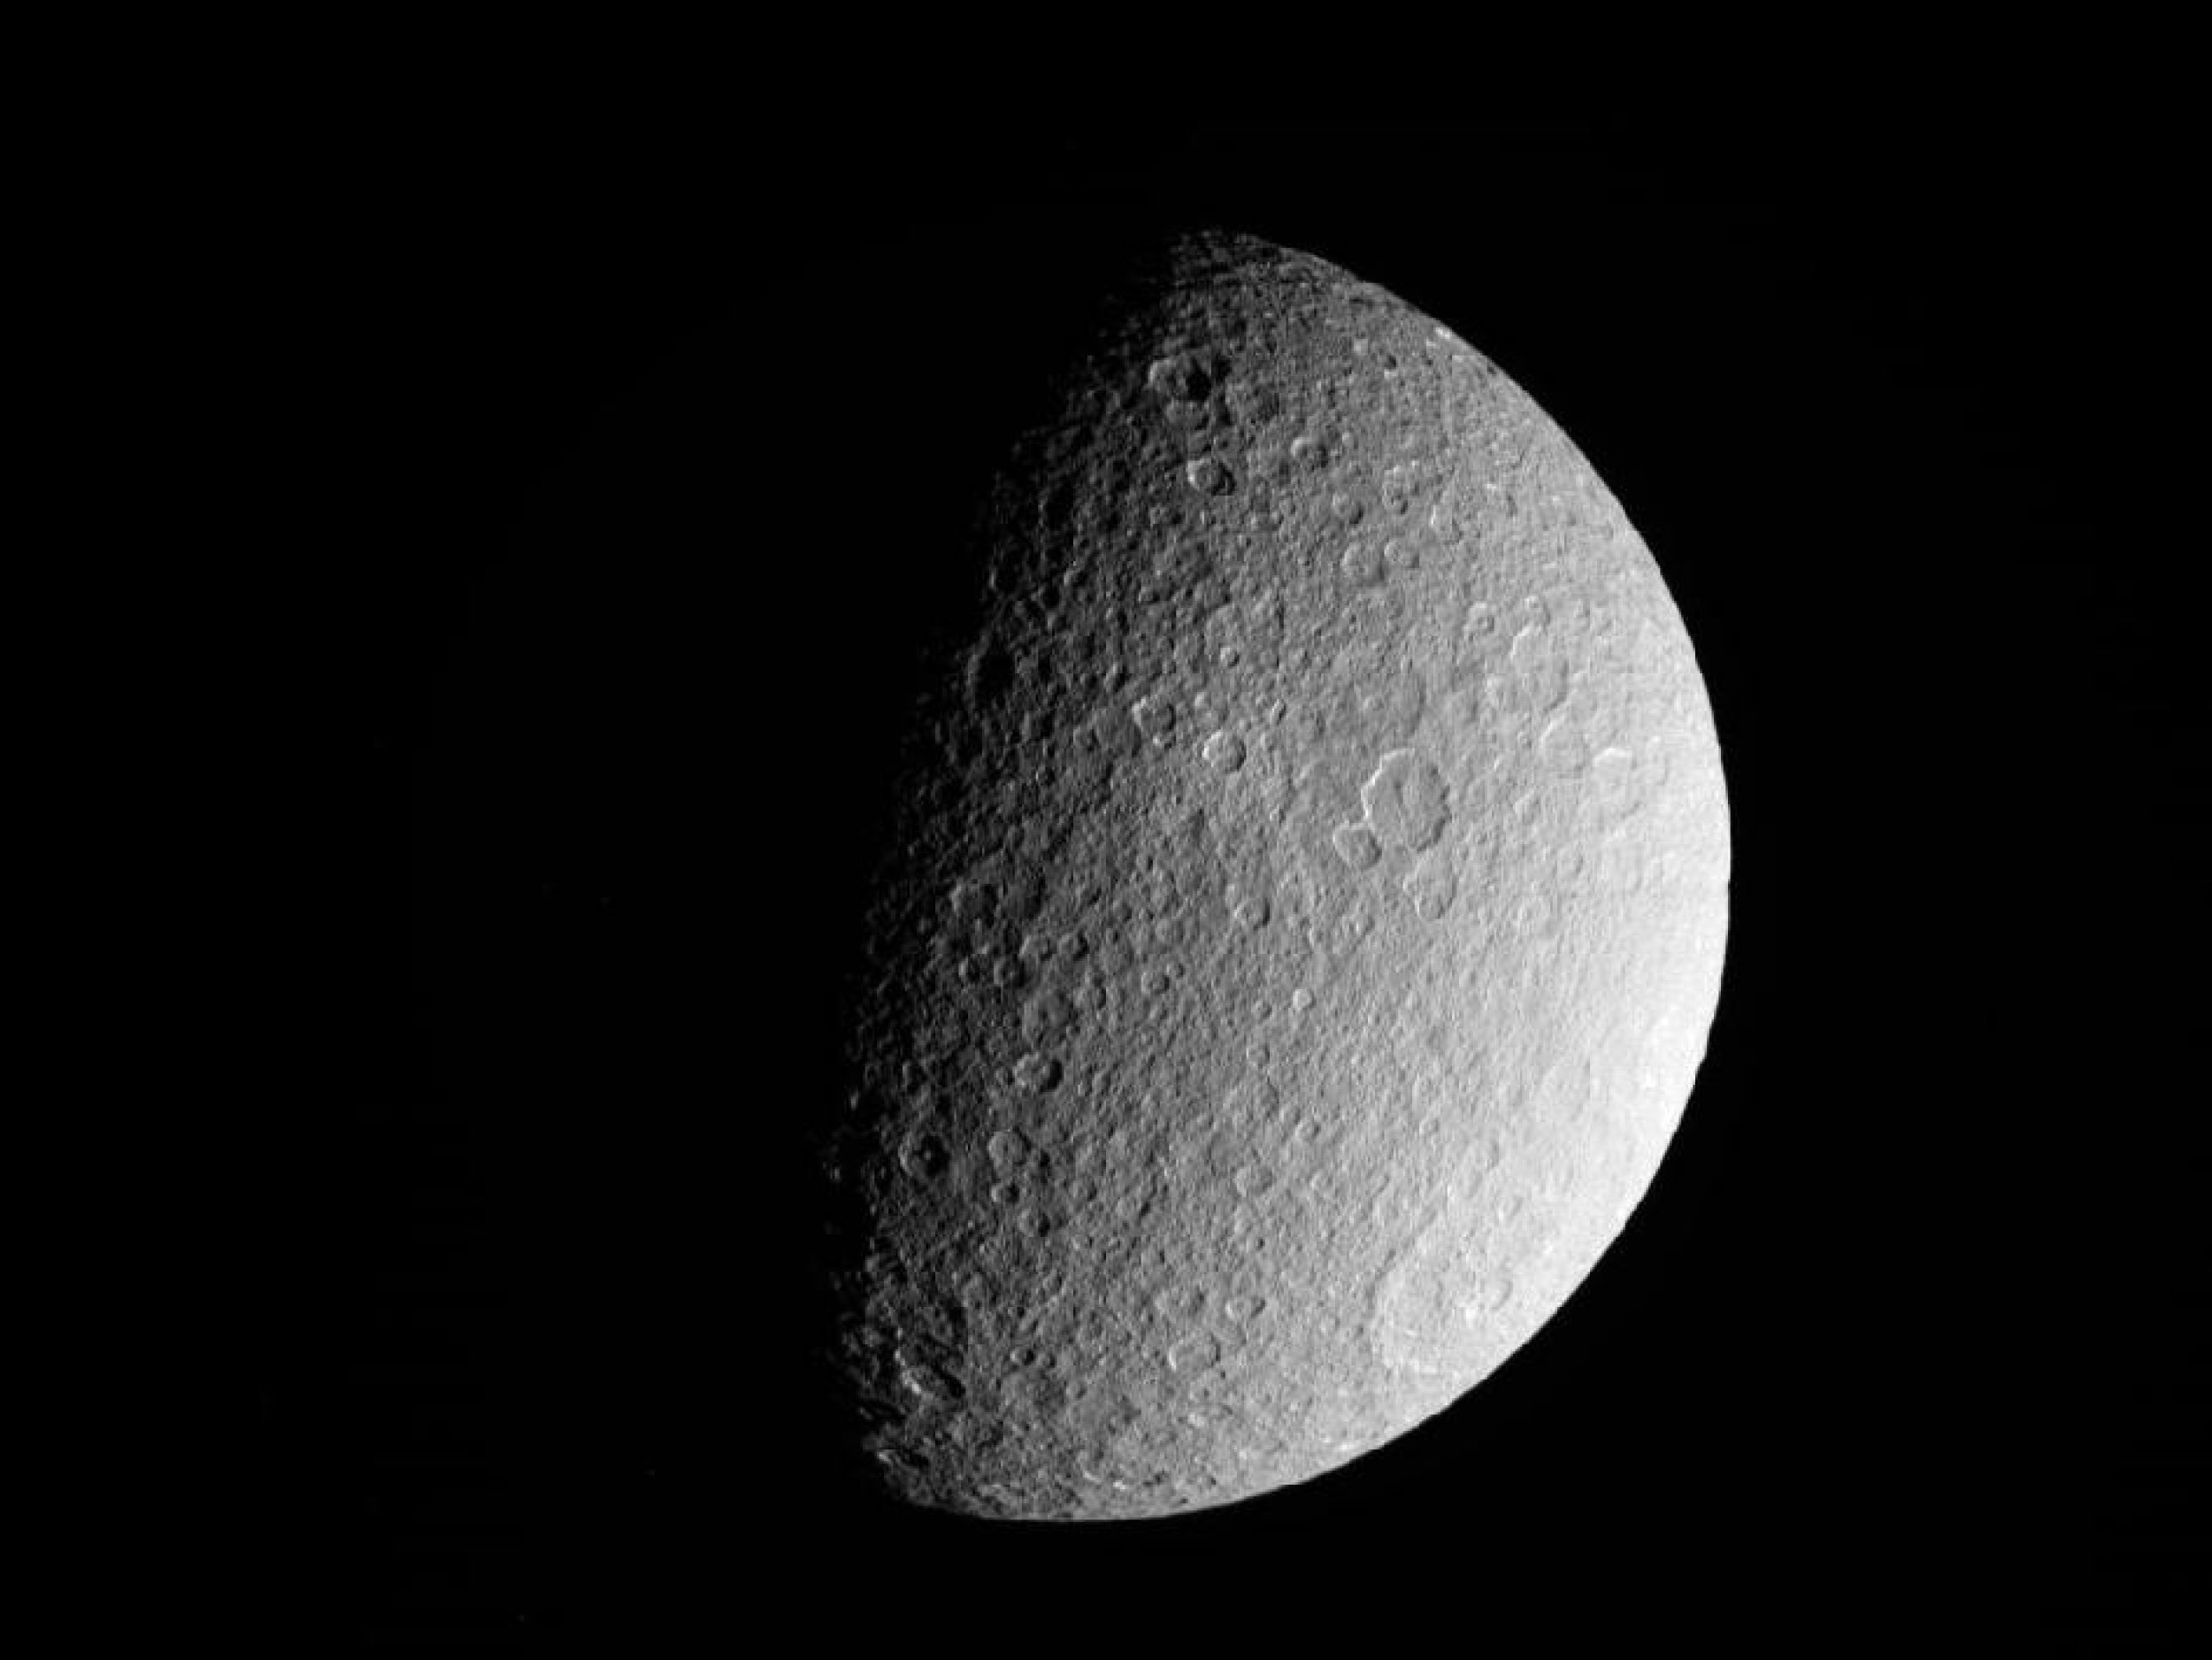 NASA039s Cassini spacecraft took this raw, unprocessed image of Saturn039s moon Rhea